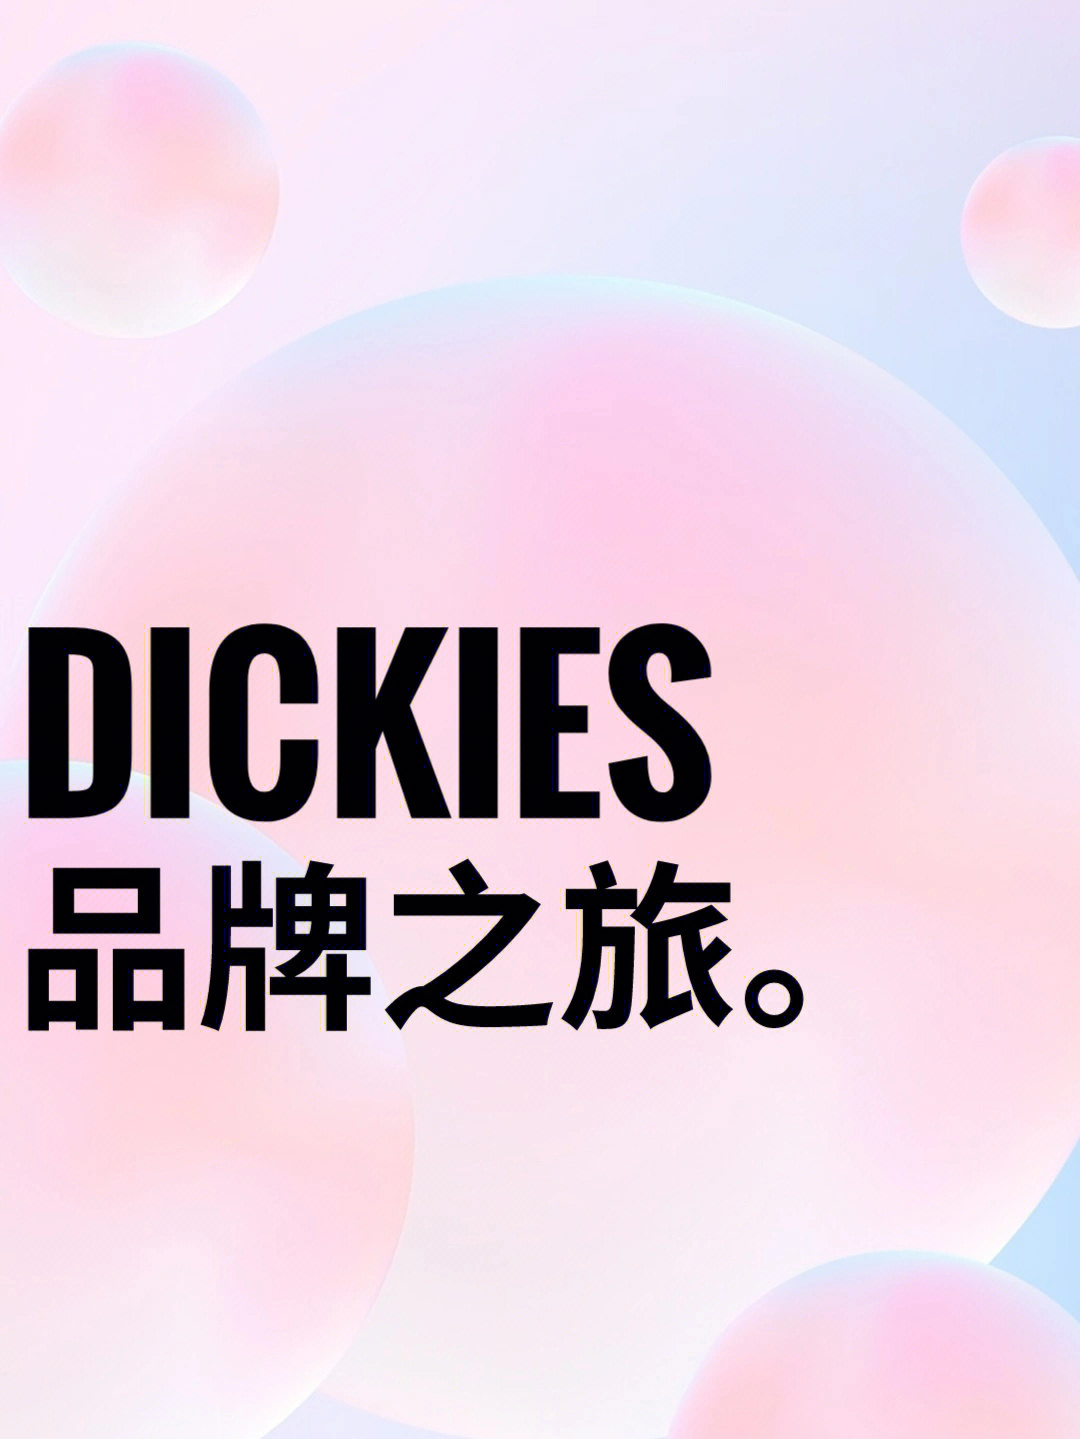 dickies中文图片